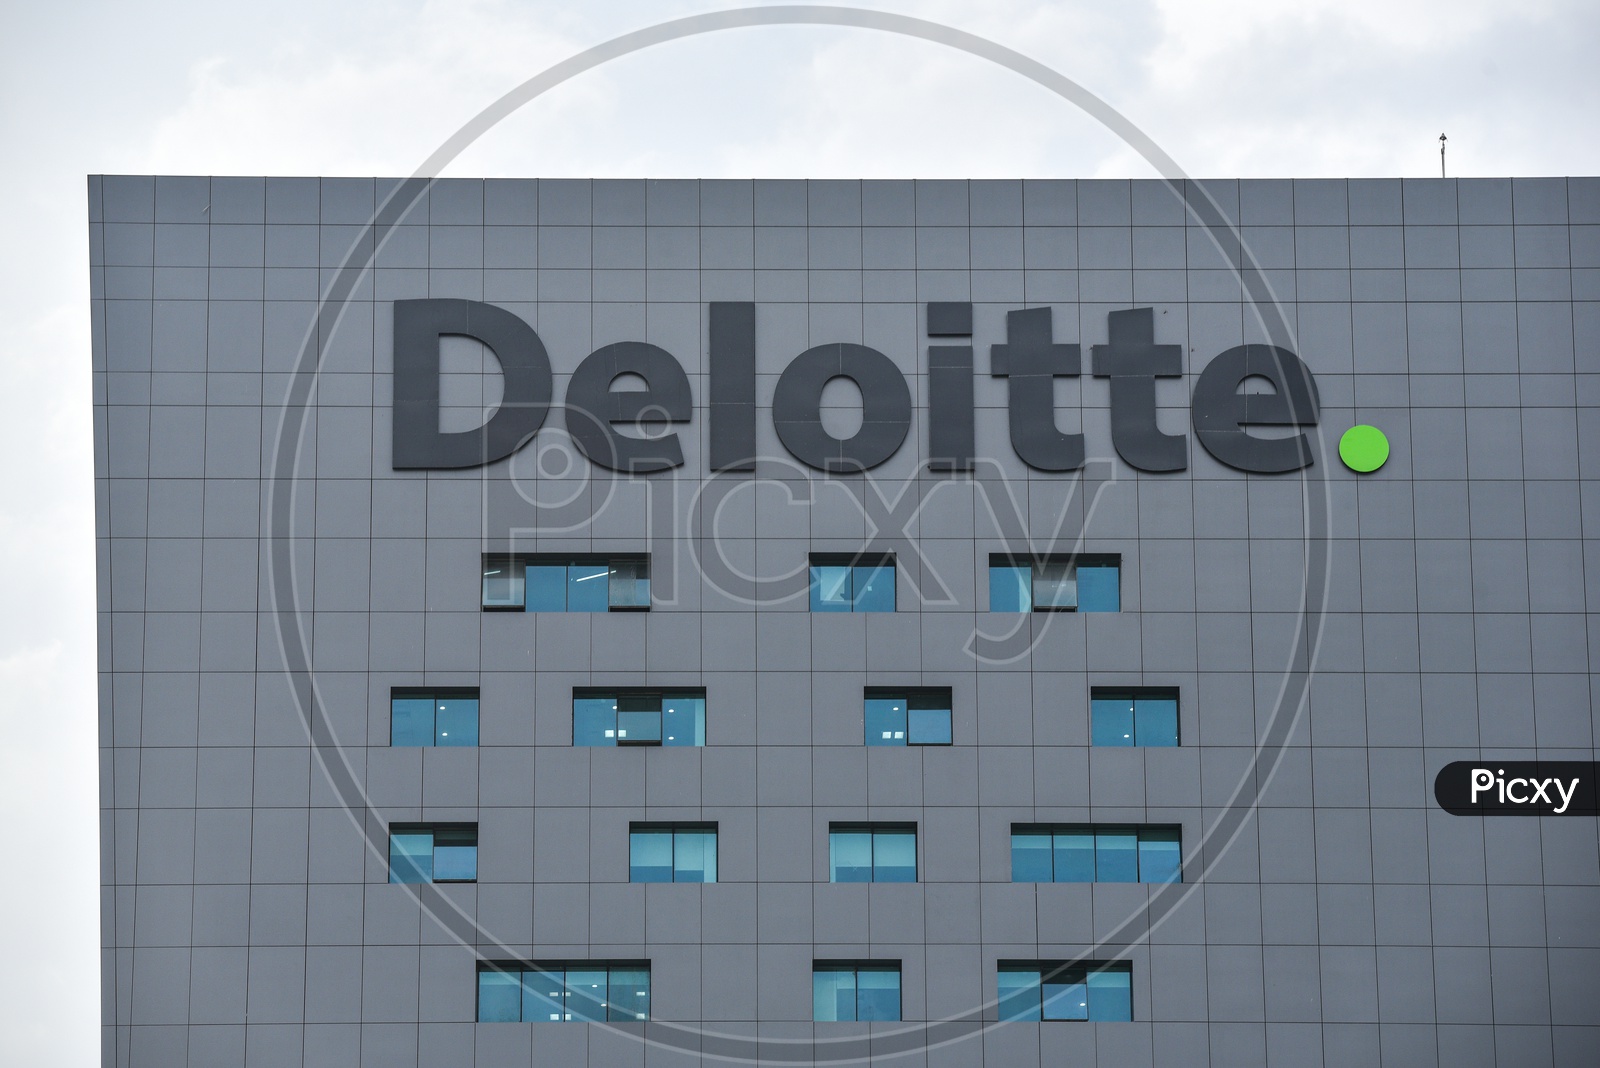 Deloitte Corporate Office Name on Building Facade